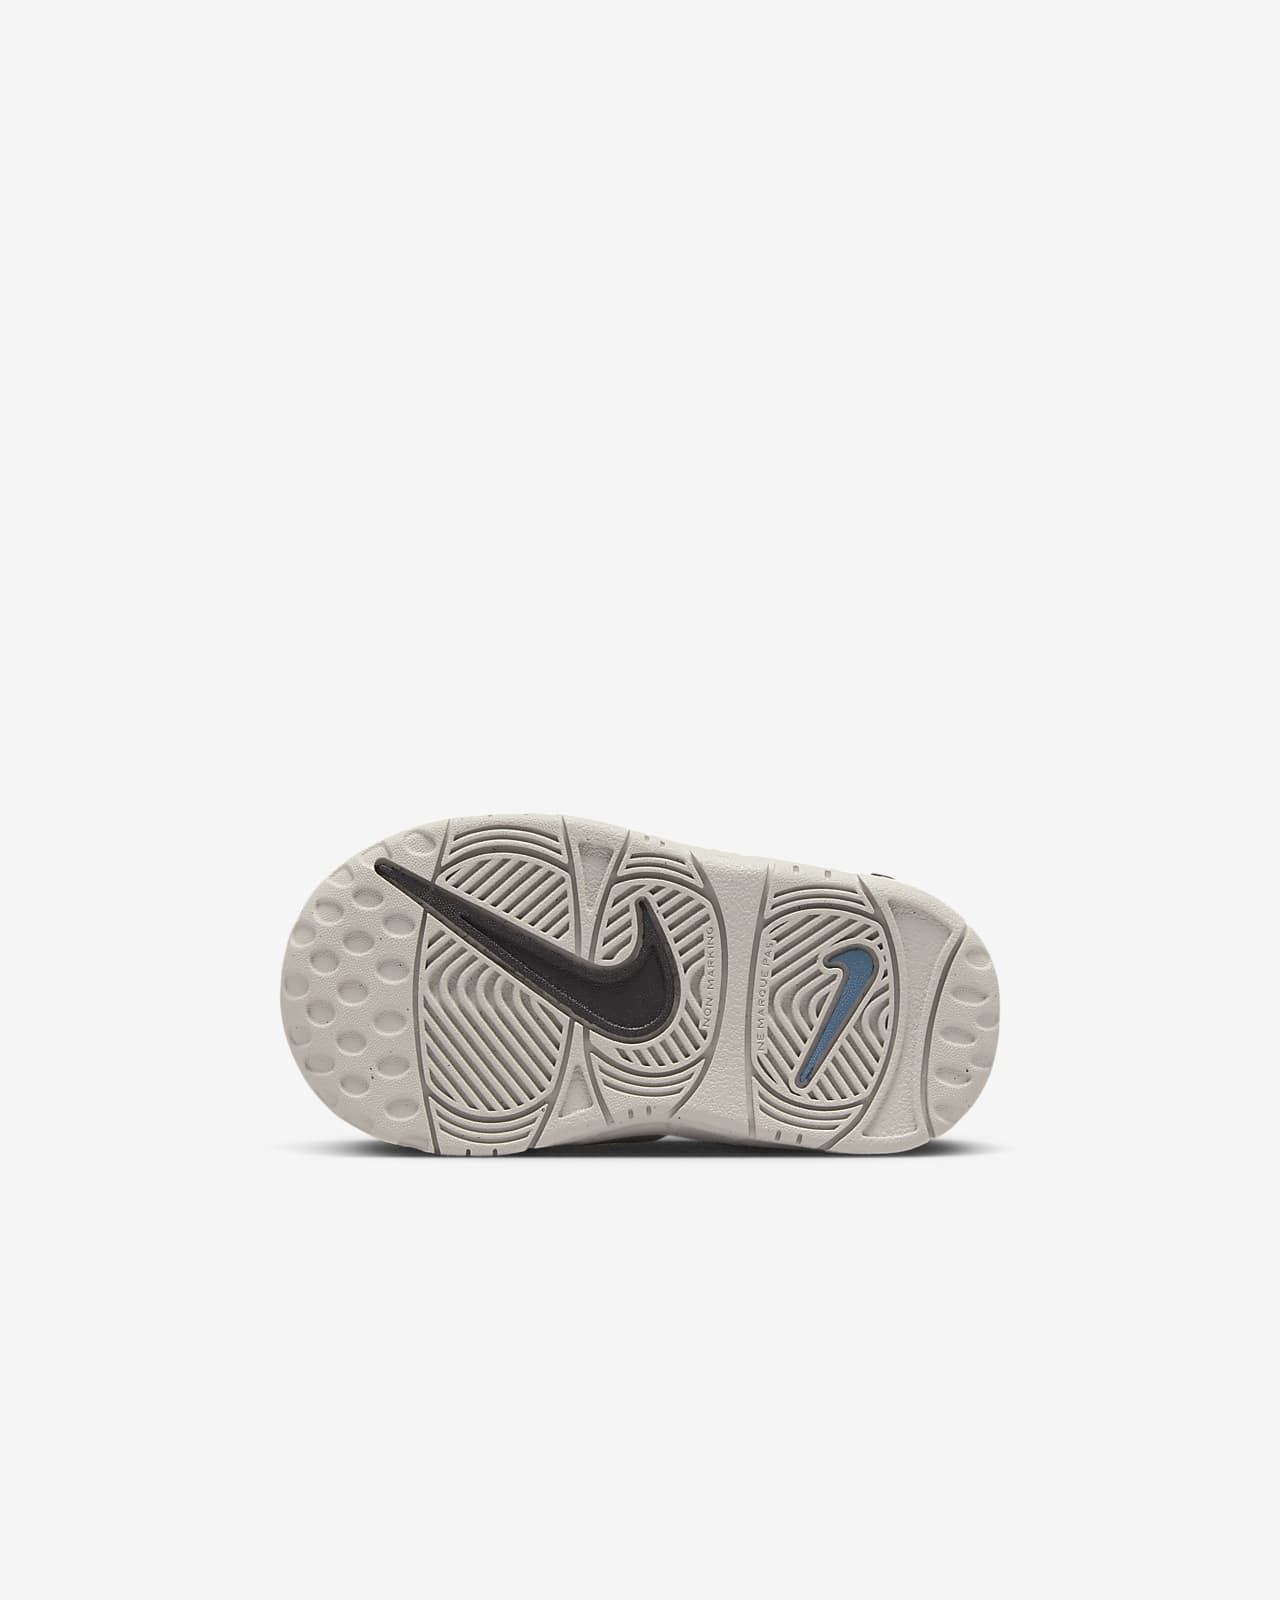 Nike Air Raid Black Grey - Size 10.5 Men